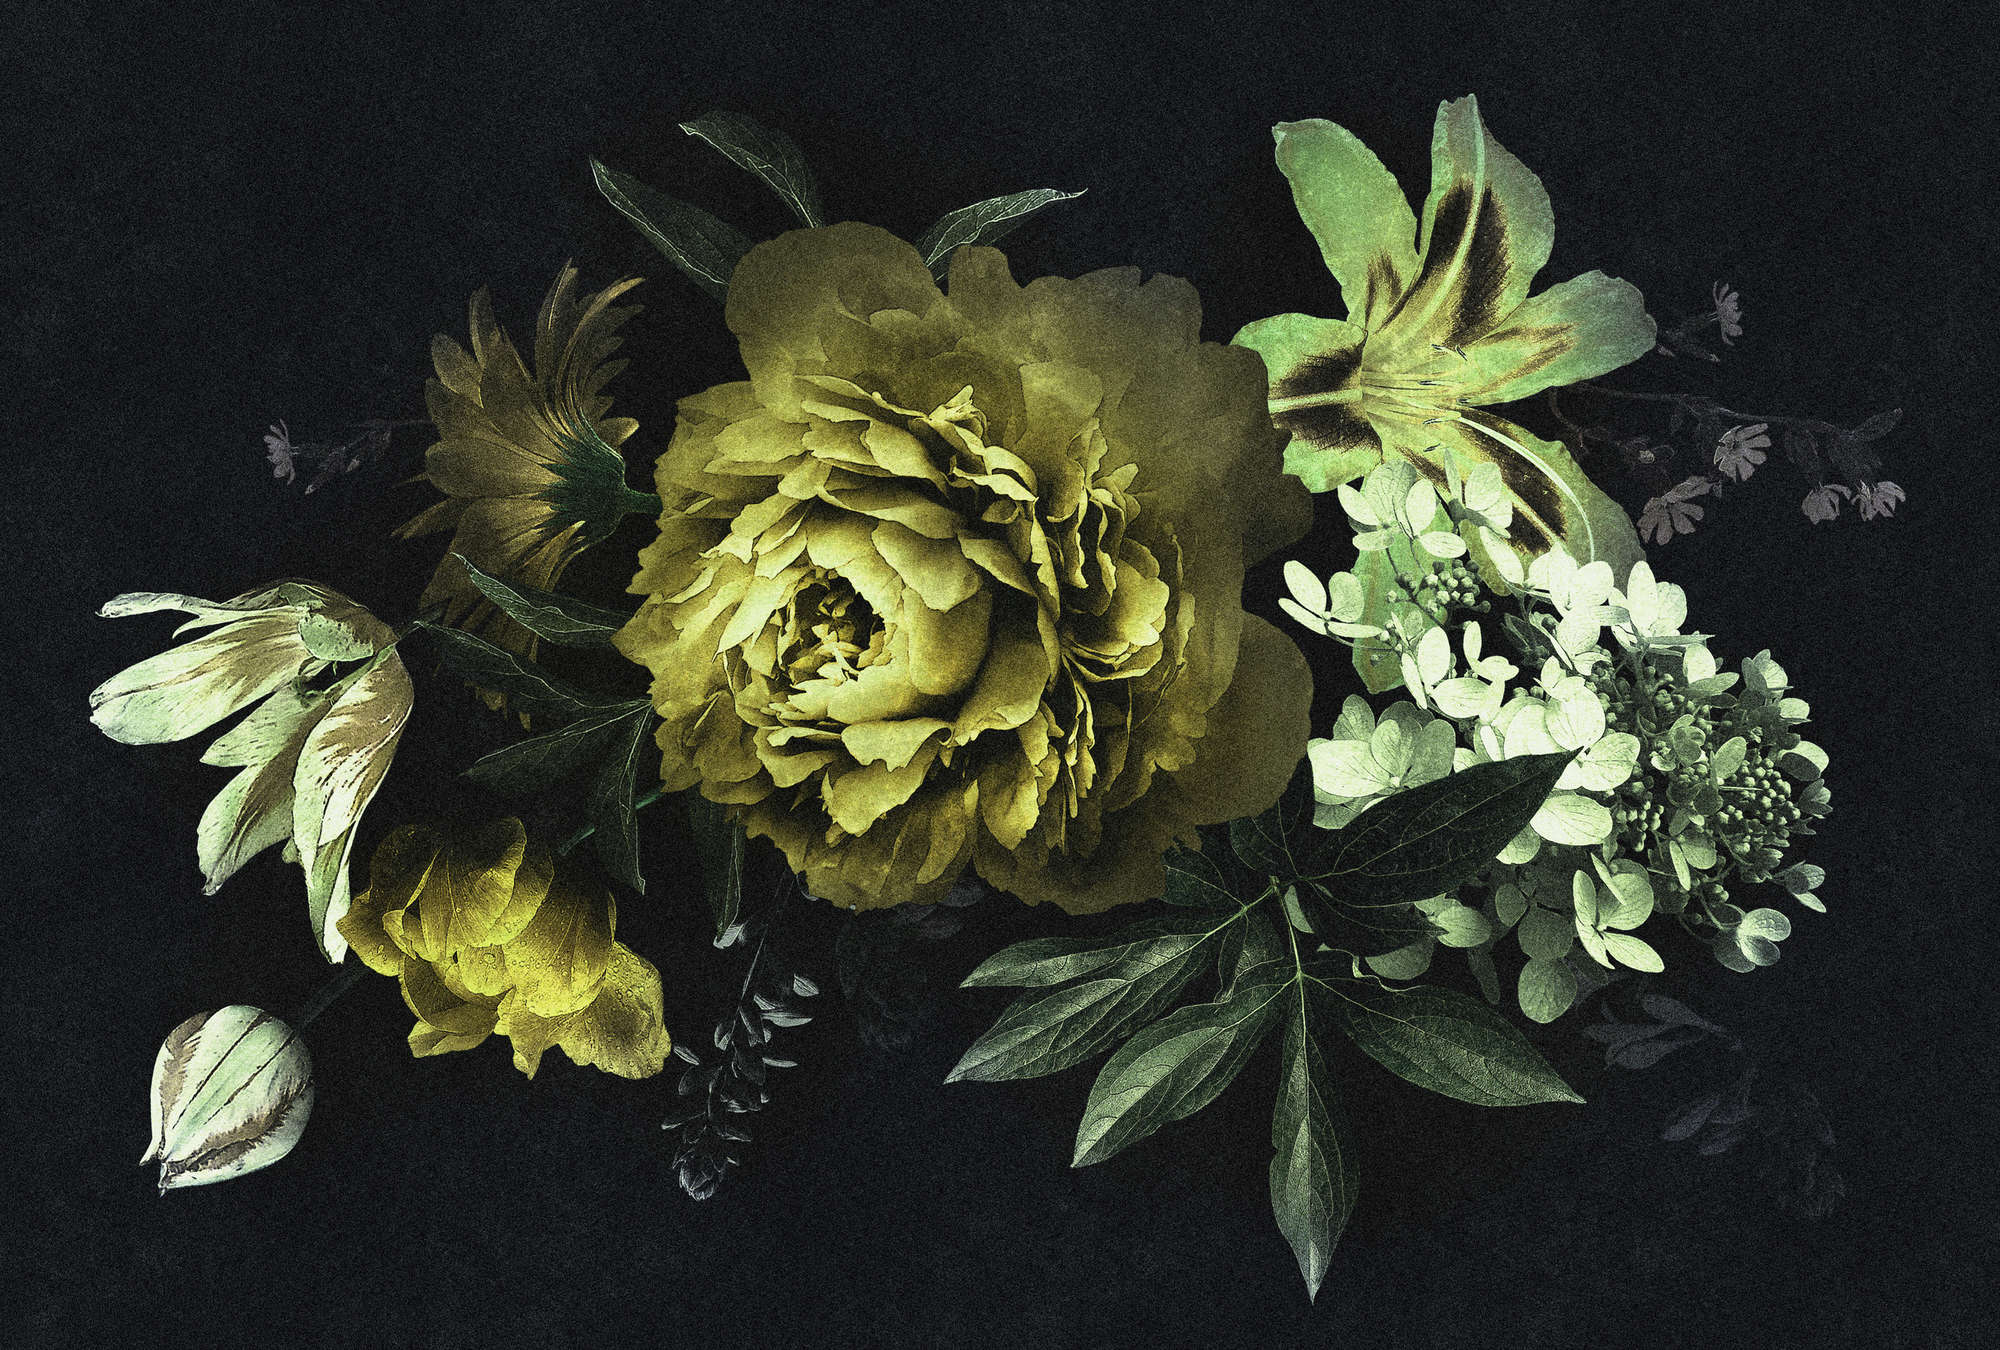             Drama queen 2 - Carta da parati con bouquet di fiori in cartoncino verde - giallo, nero | Premium Smooth Fleece
        